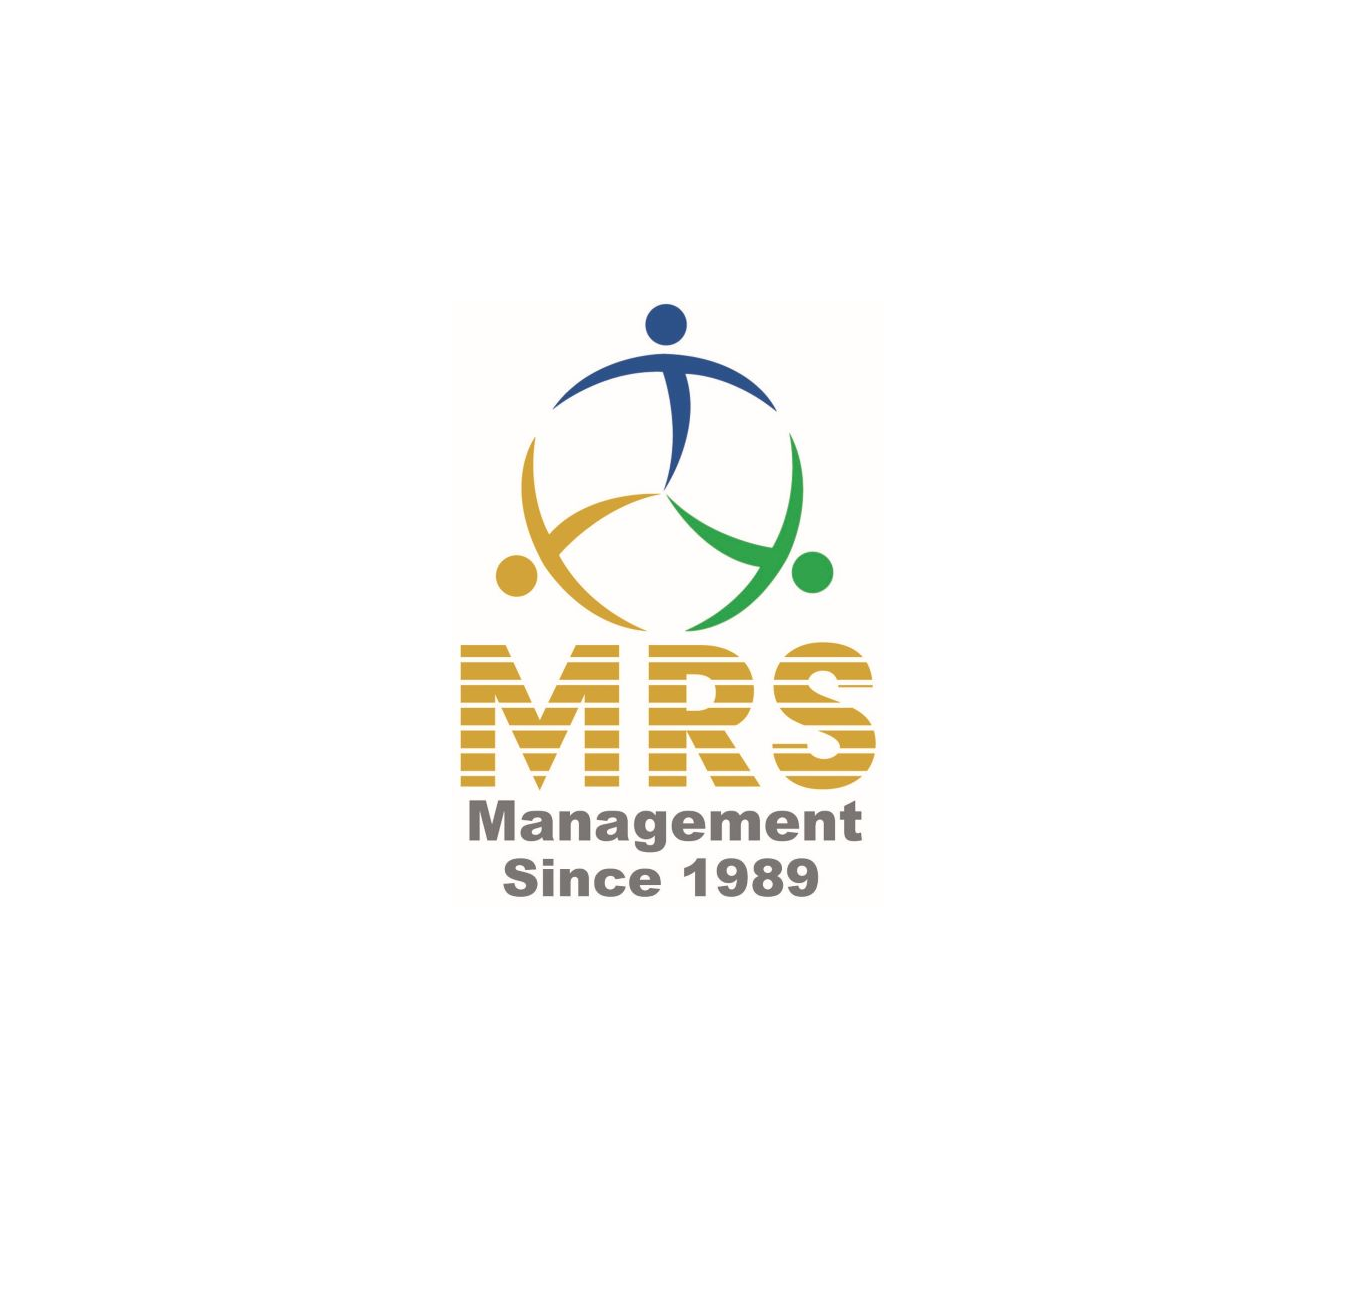 MRS logo small | MRS Training Provider In Malaysia